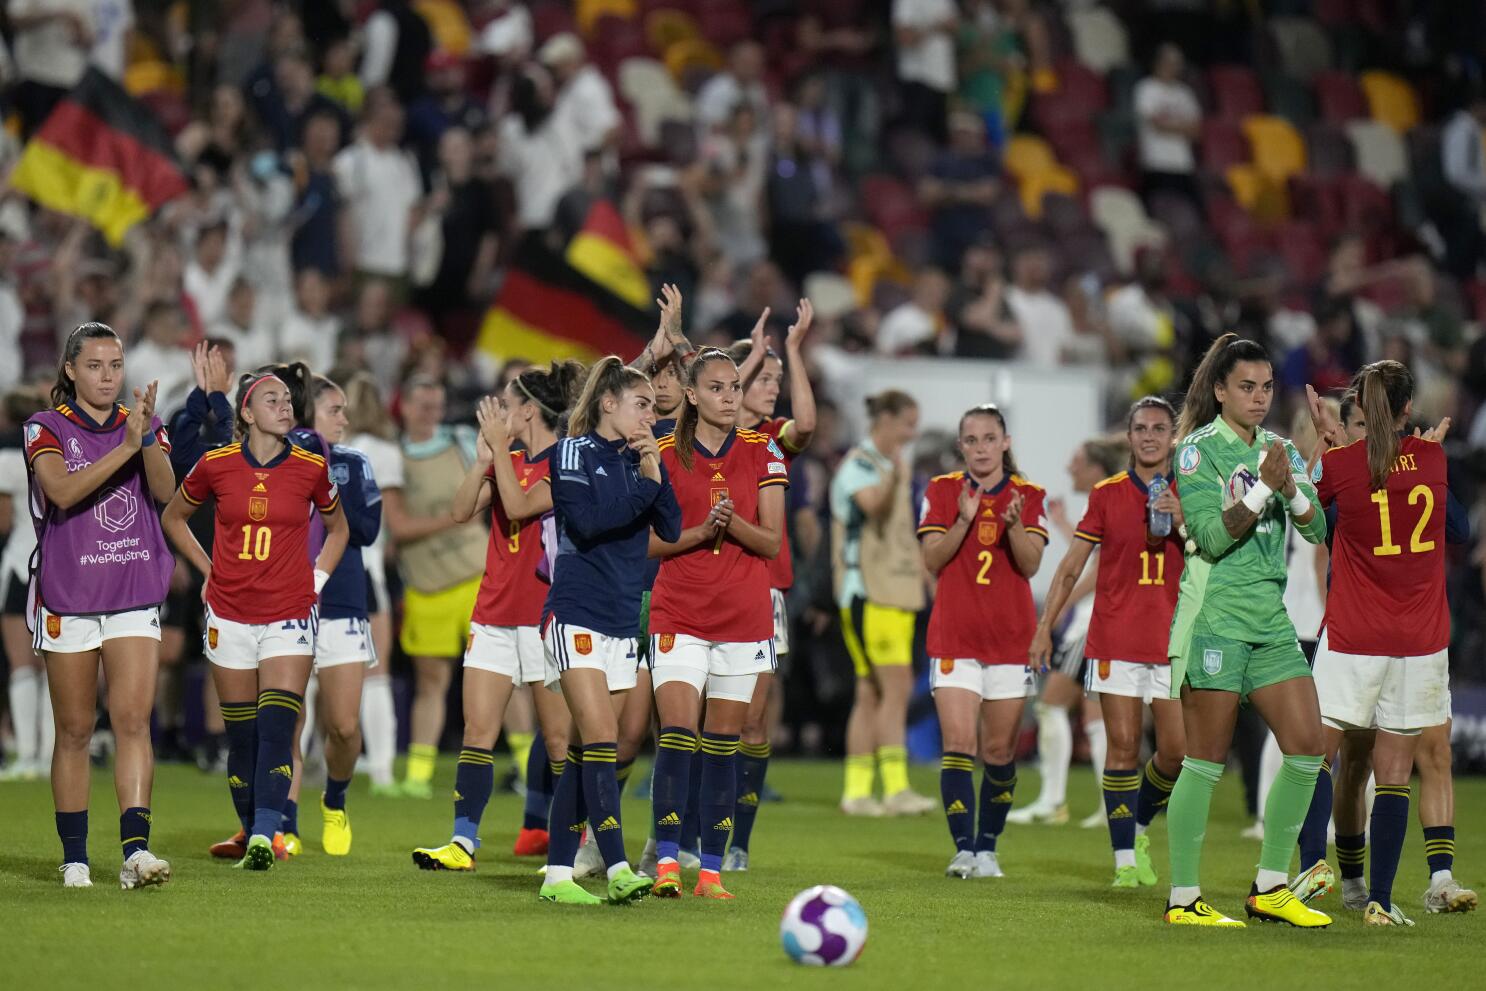 Equipo español futbol femenino